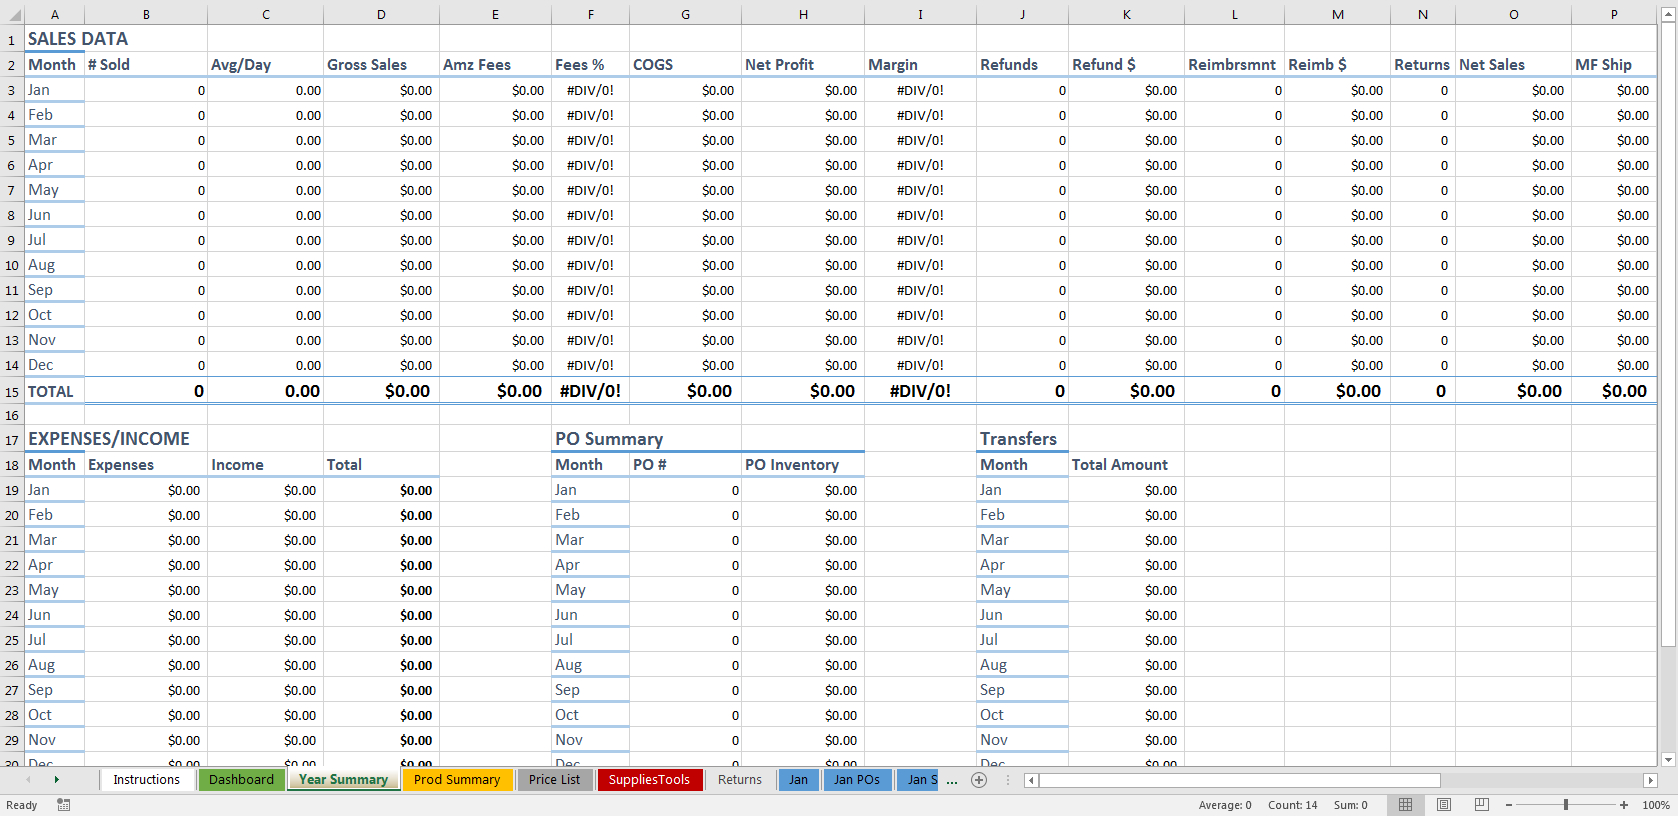 Amazon Fba Seller Sales & Profit Excel Spreadsheet Throughout The Ultimate Amazon Fba Sales Spreadsheet V1 – Tools For Fba